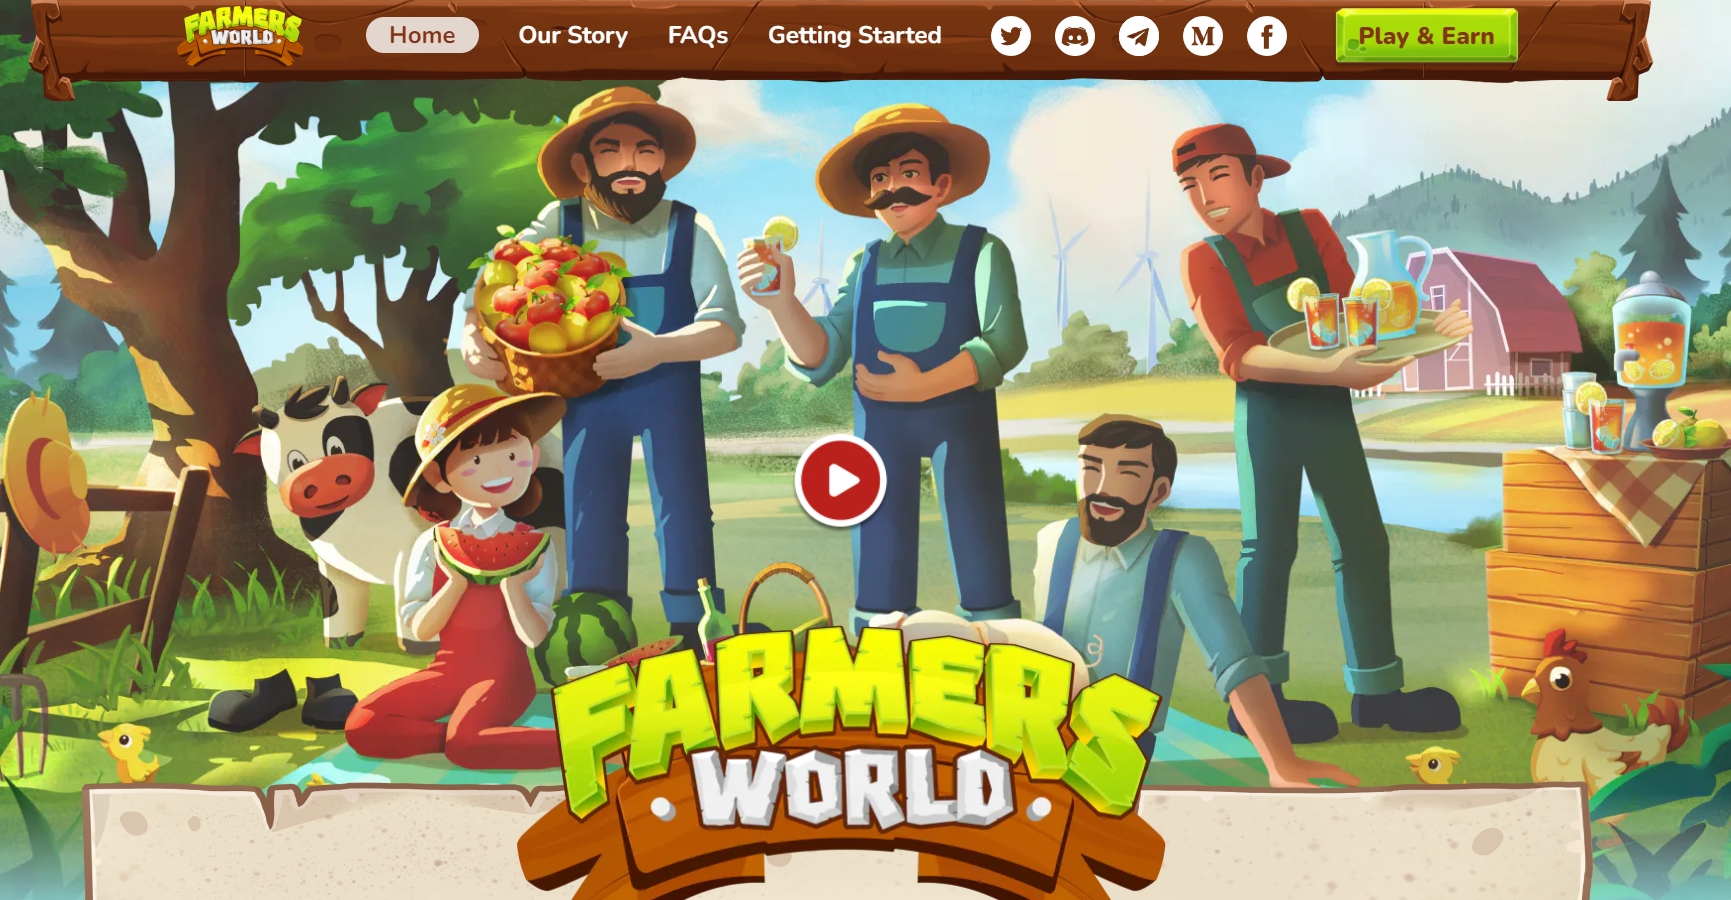 Farmers World